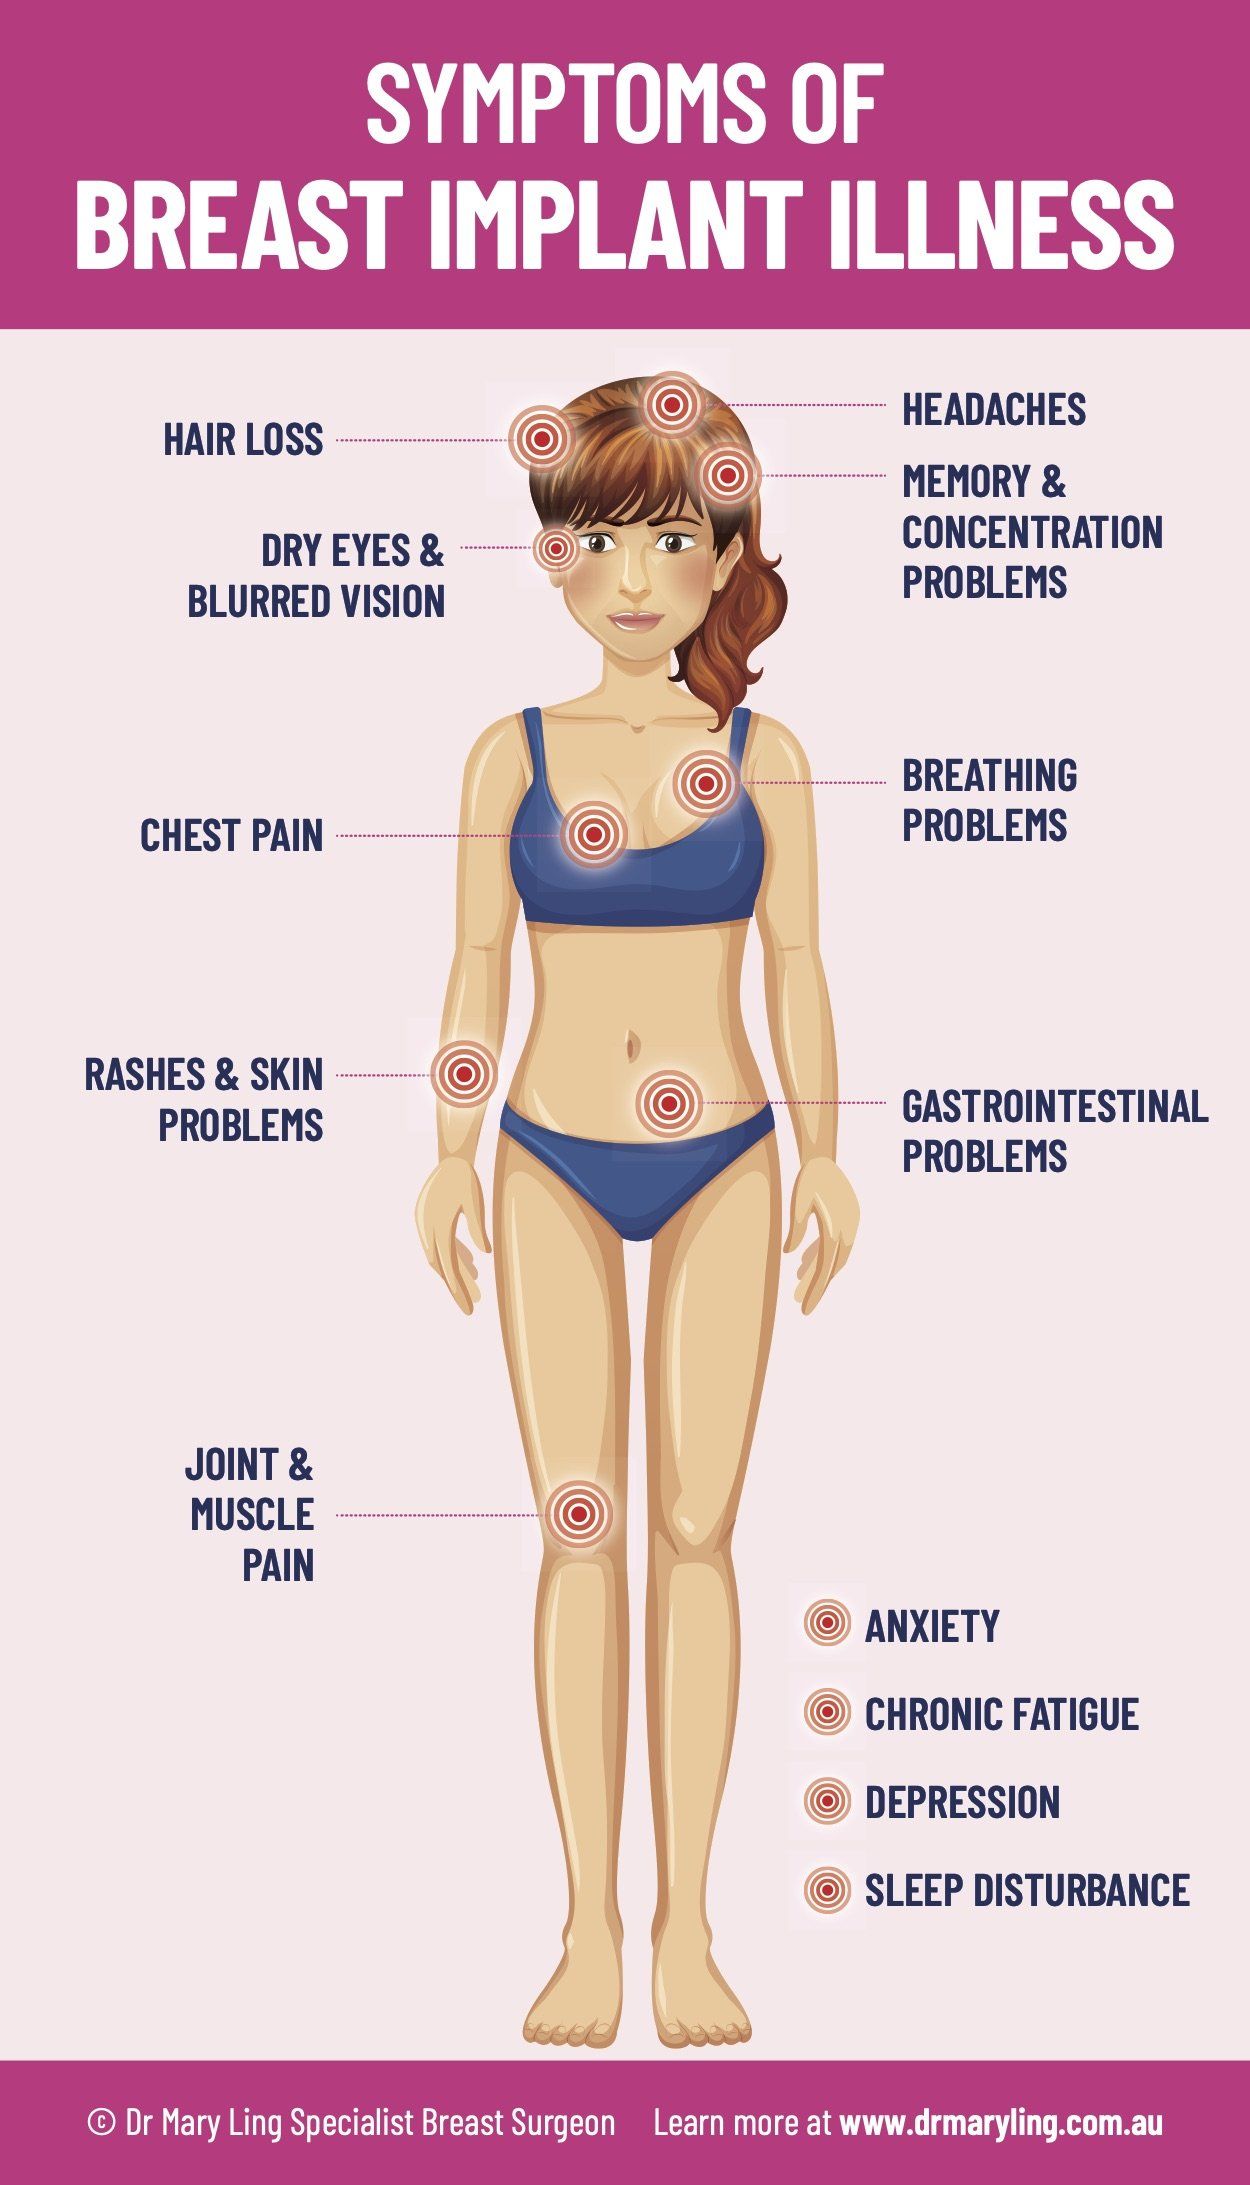 Symptoms of Breast Implant Illness